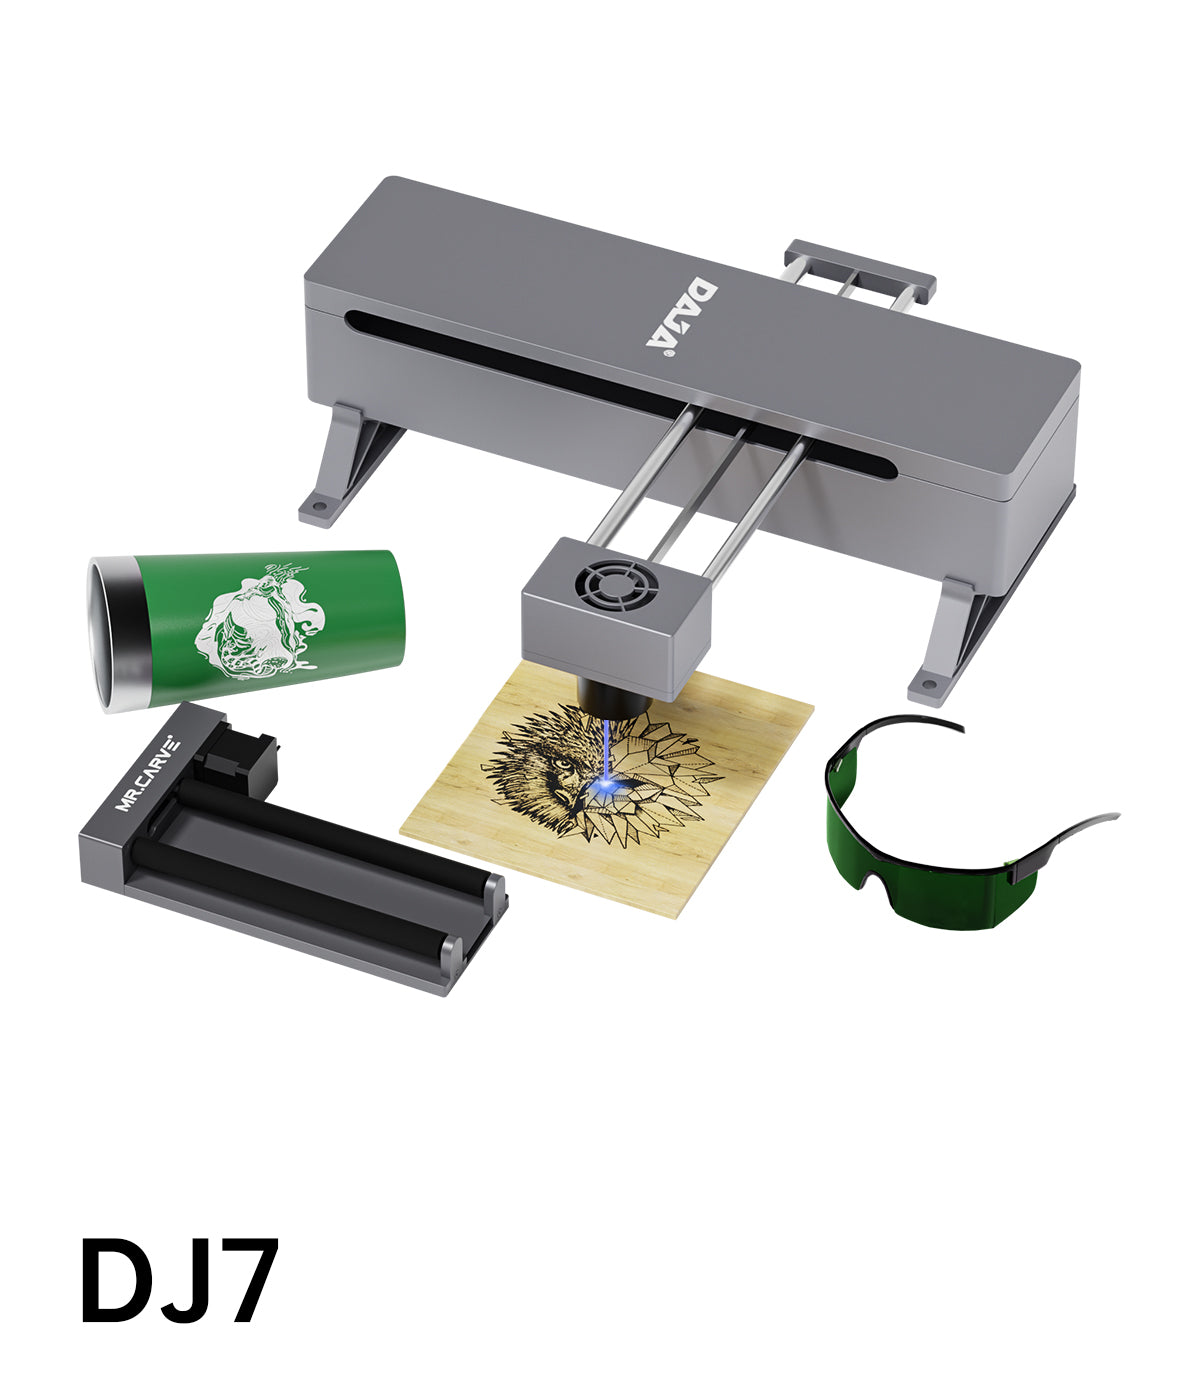 MR.CARVE DJ7 Small Laser Engraver Machine